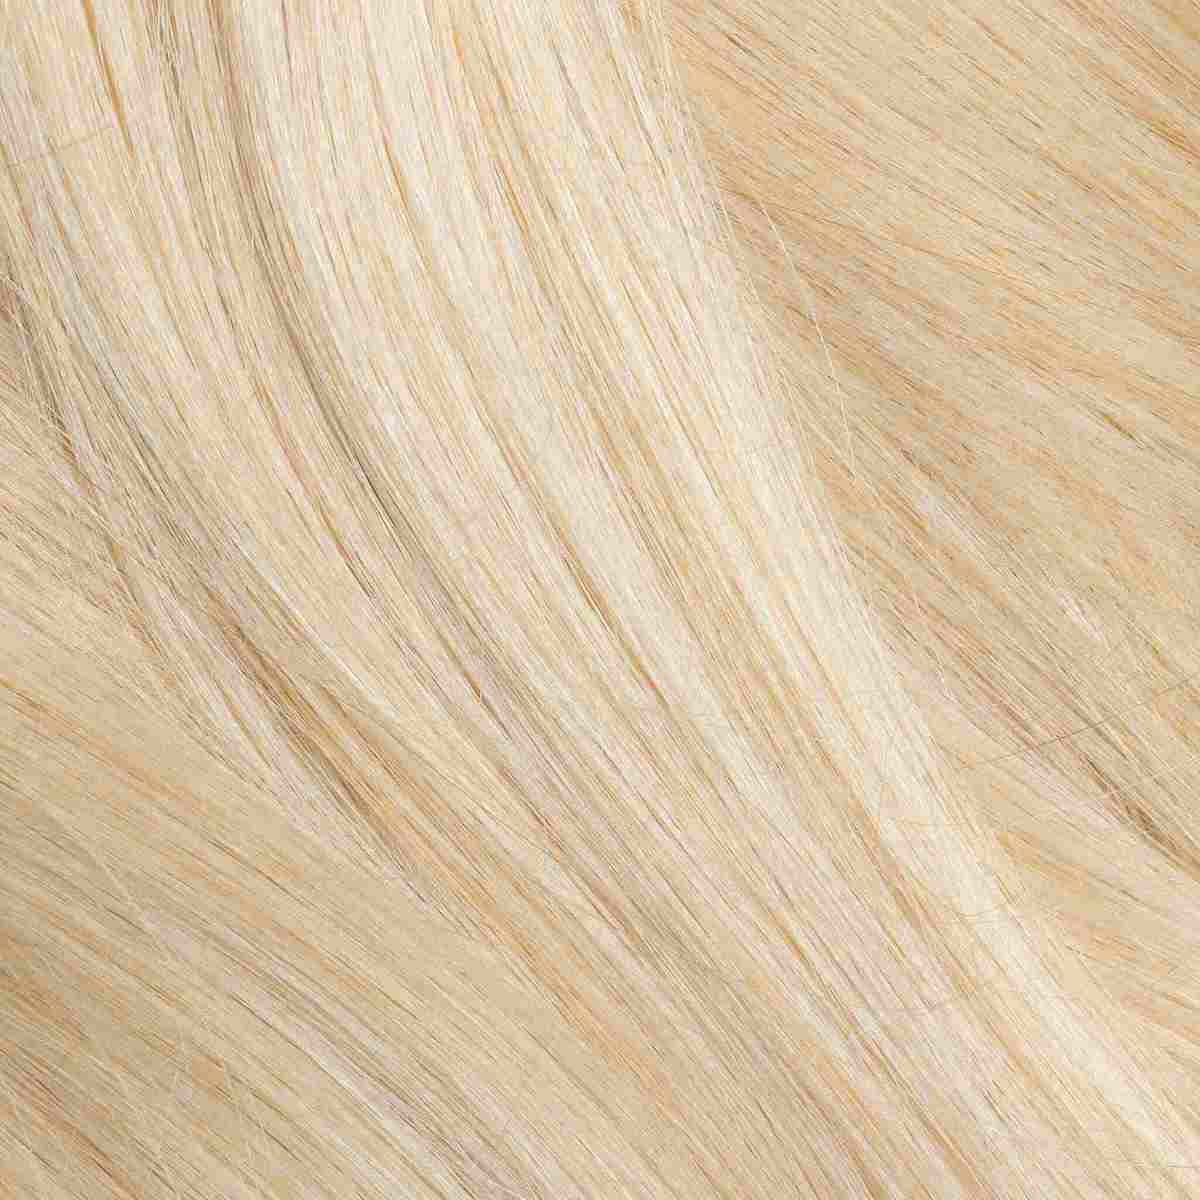 Genius (Micro) Weft 22" 88g Professional Hair Extensions - #60 Ash Blonde